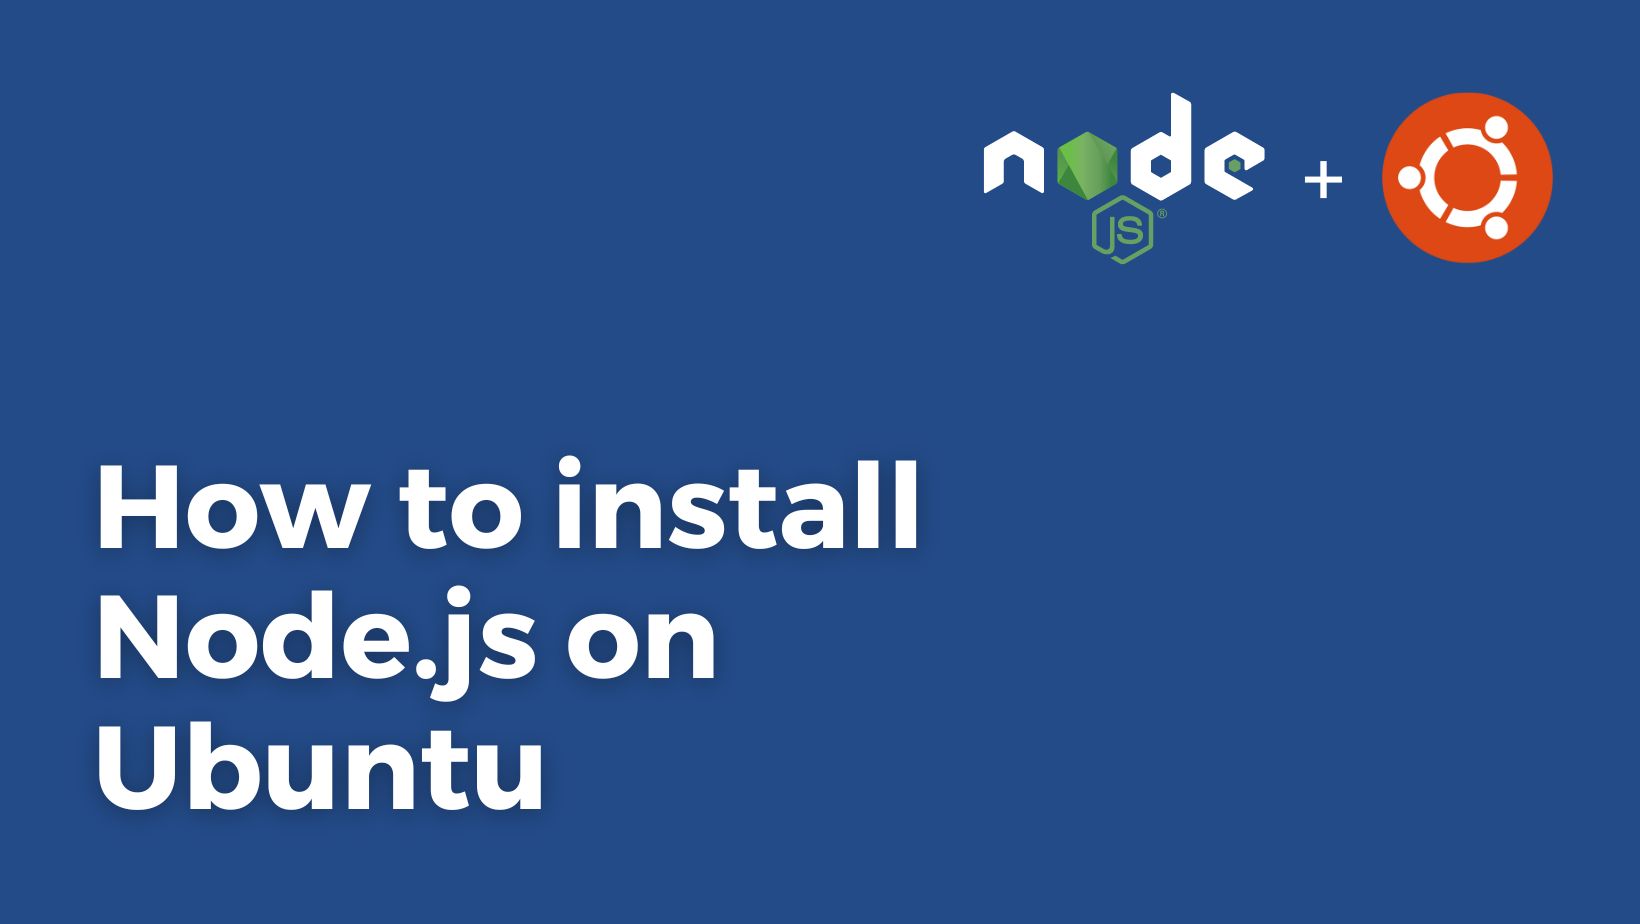 How to install Node.js on Ubuntu